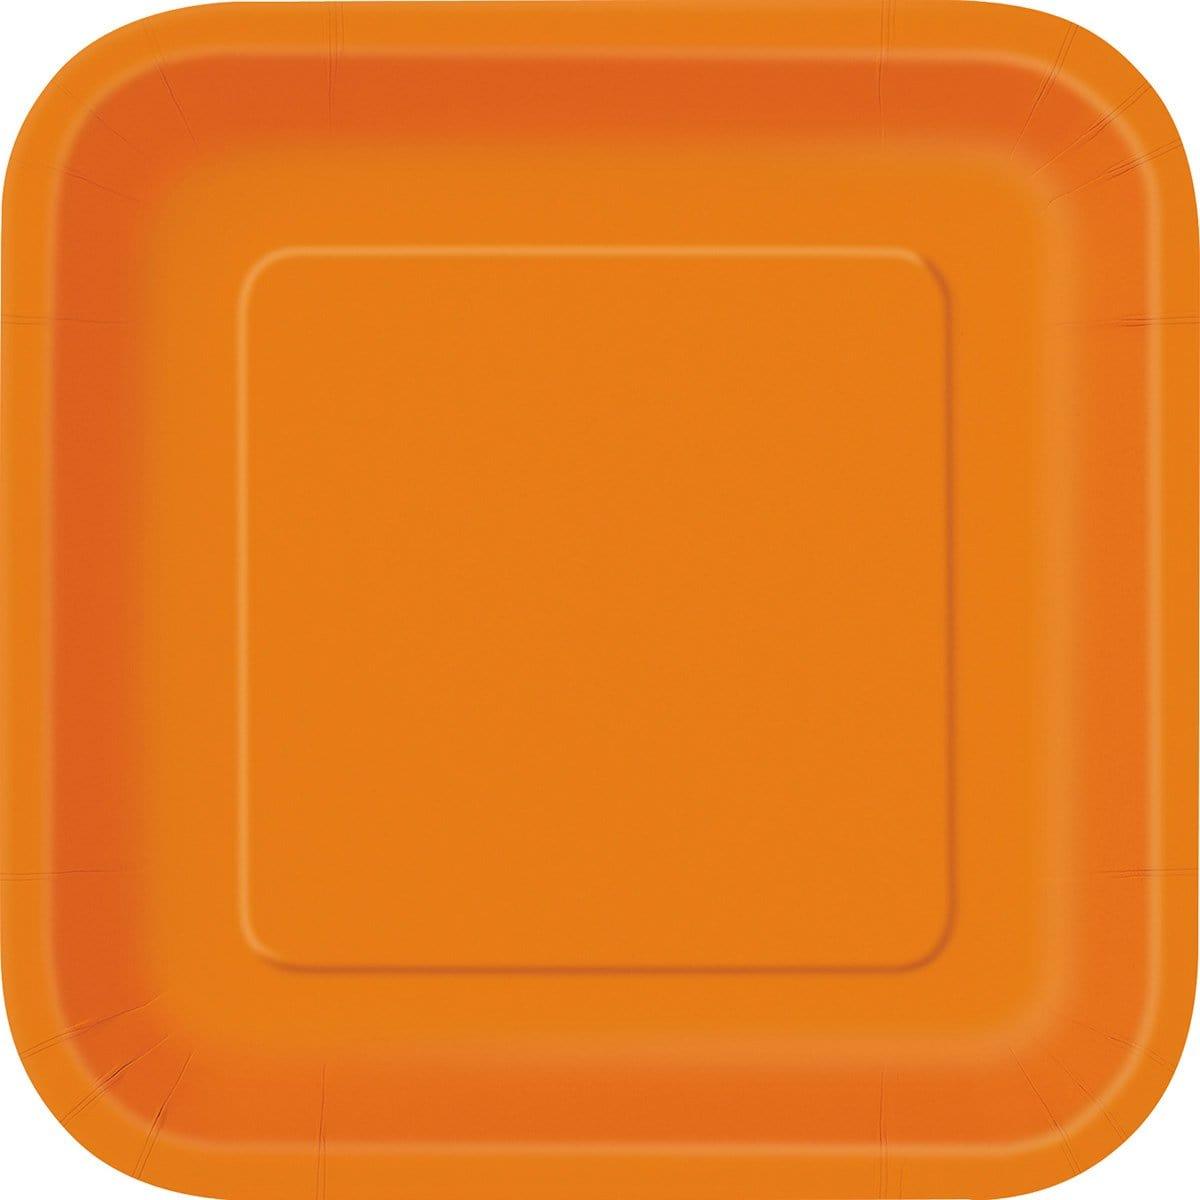 Buy Plasticware Square Paper Plates 9 In. - Pumpkin Orange 14/pkg. sold at Party Expert